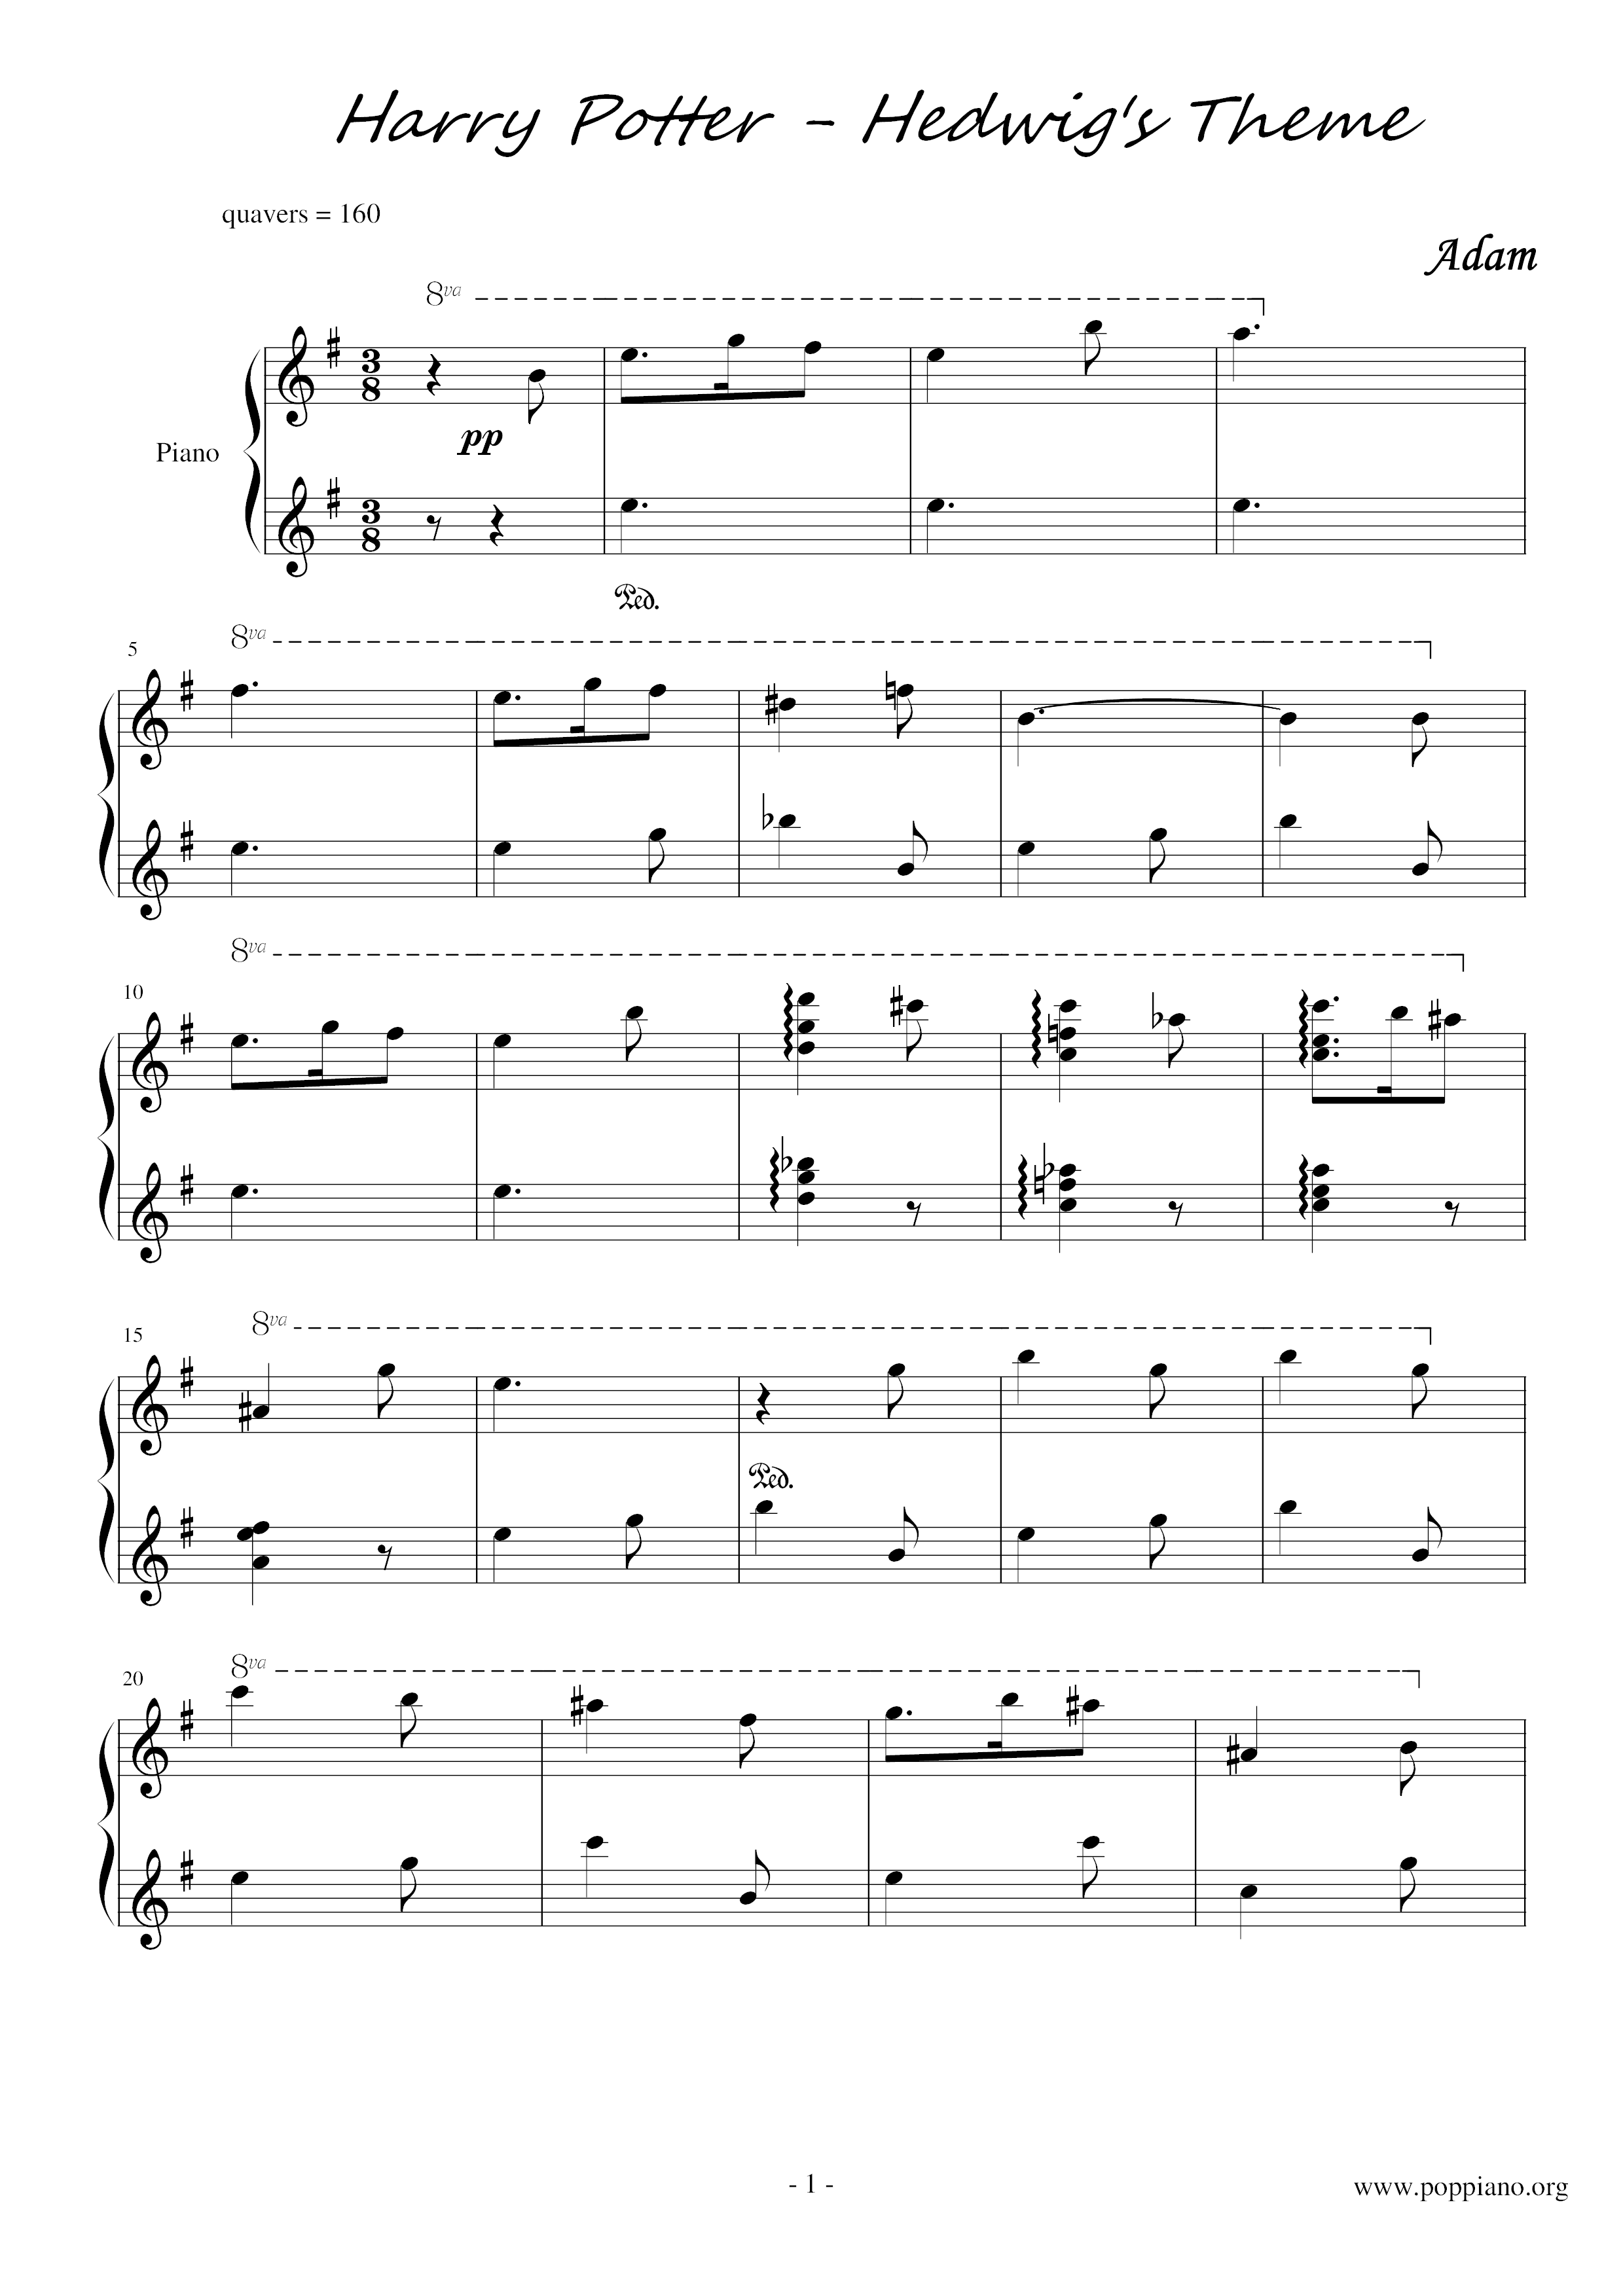 john-williams-harry-potter-hedwig-s-theme-sheet-music-pdf-free